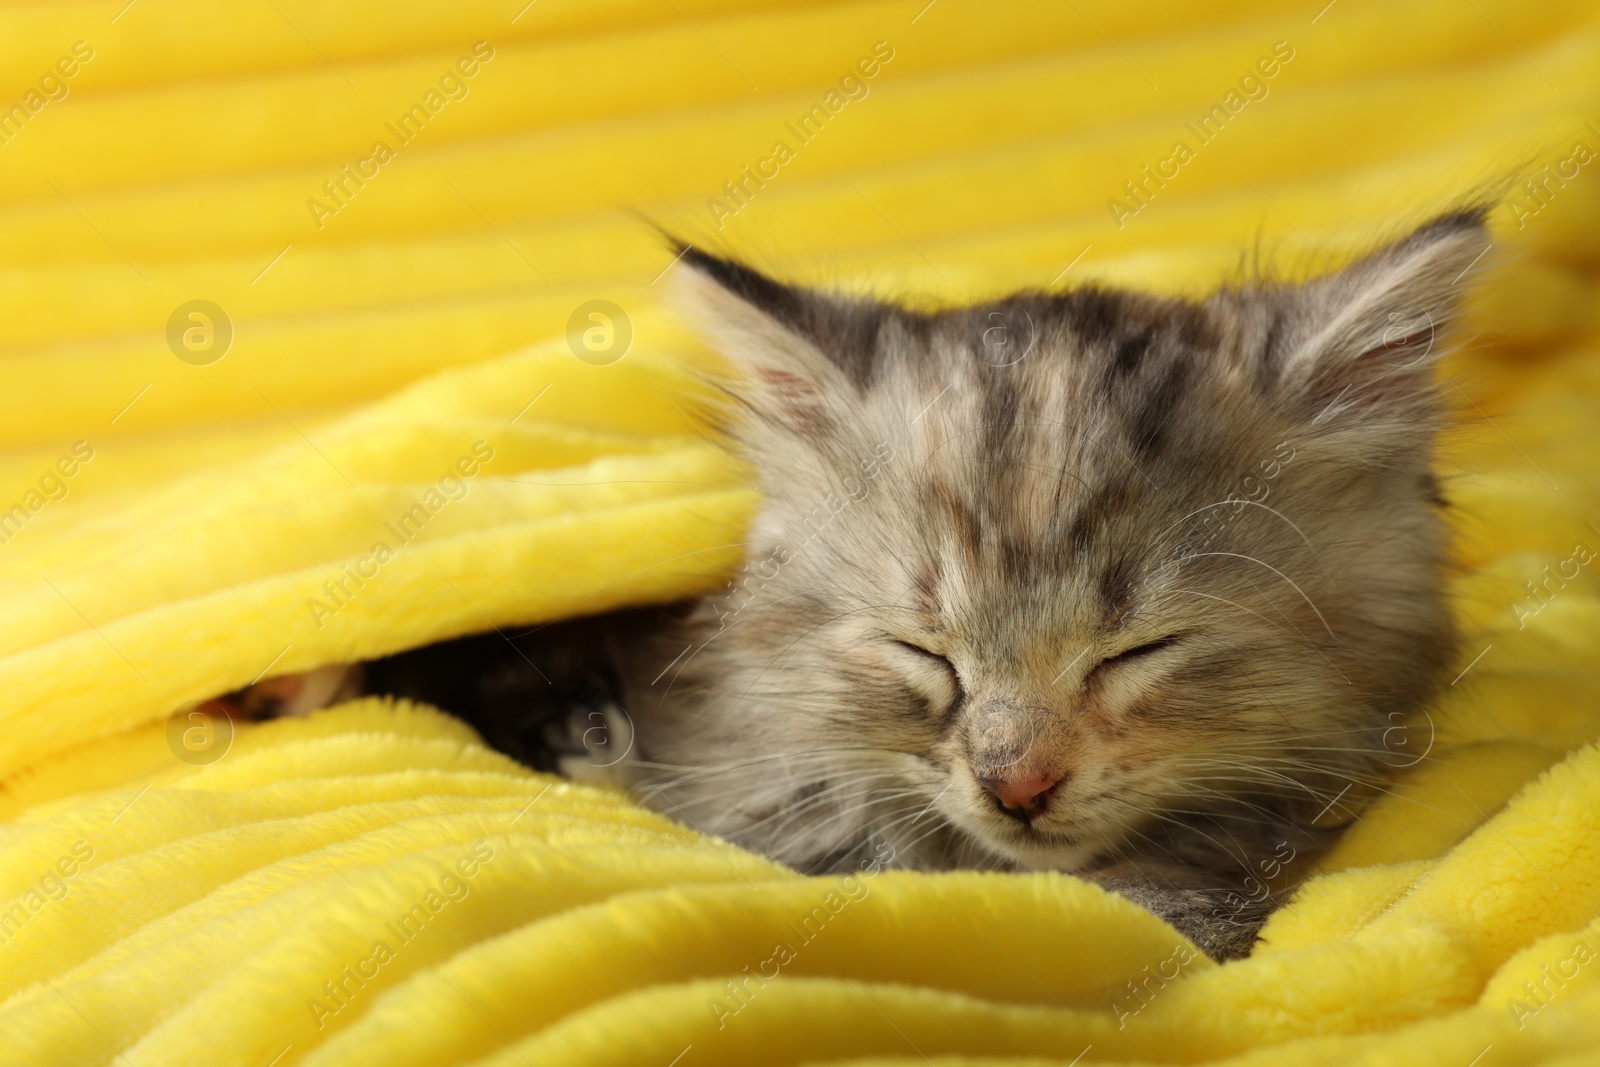 Photo of Cute kitten sleeping in soft yellow blanket